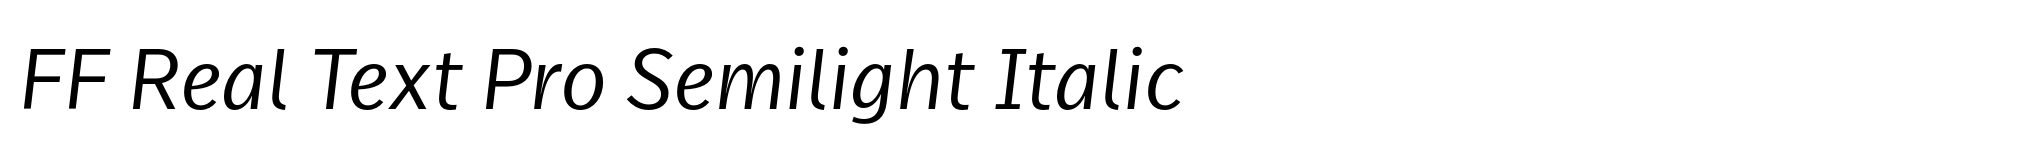 FF Real Text Pro Semilight Italic image